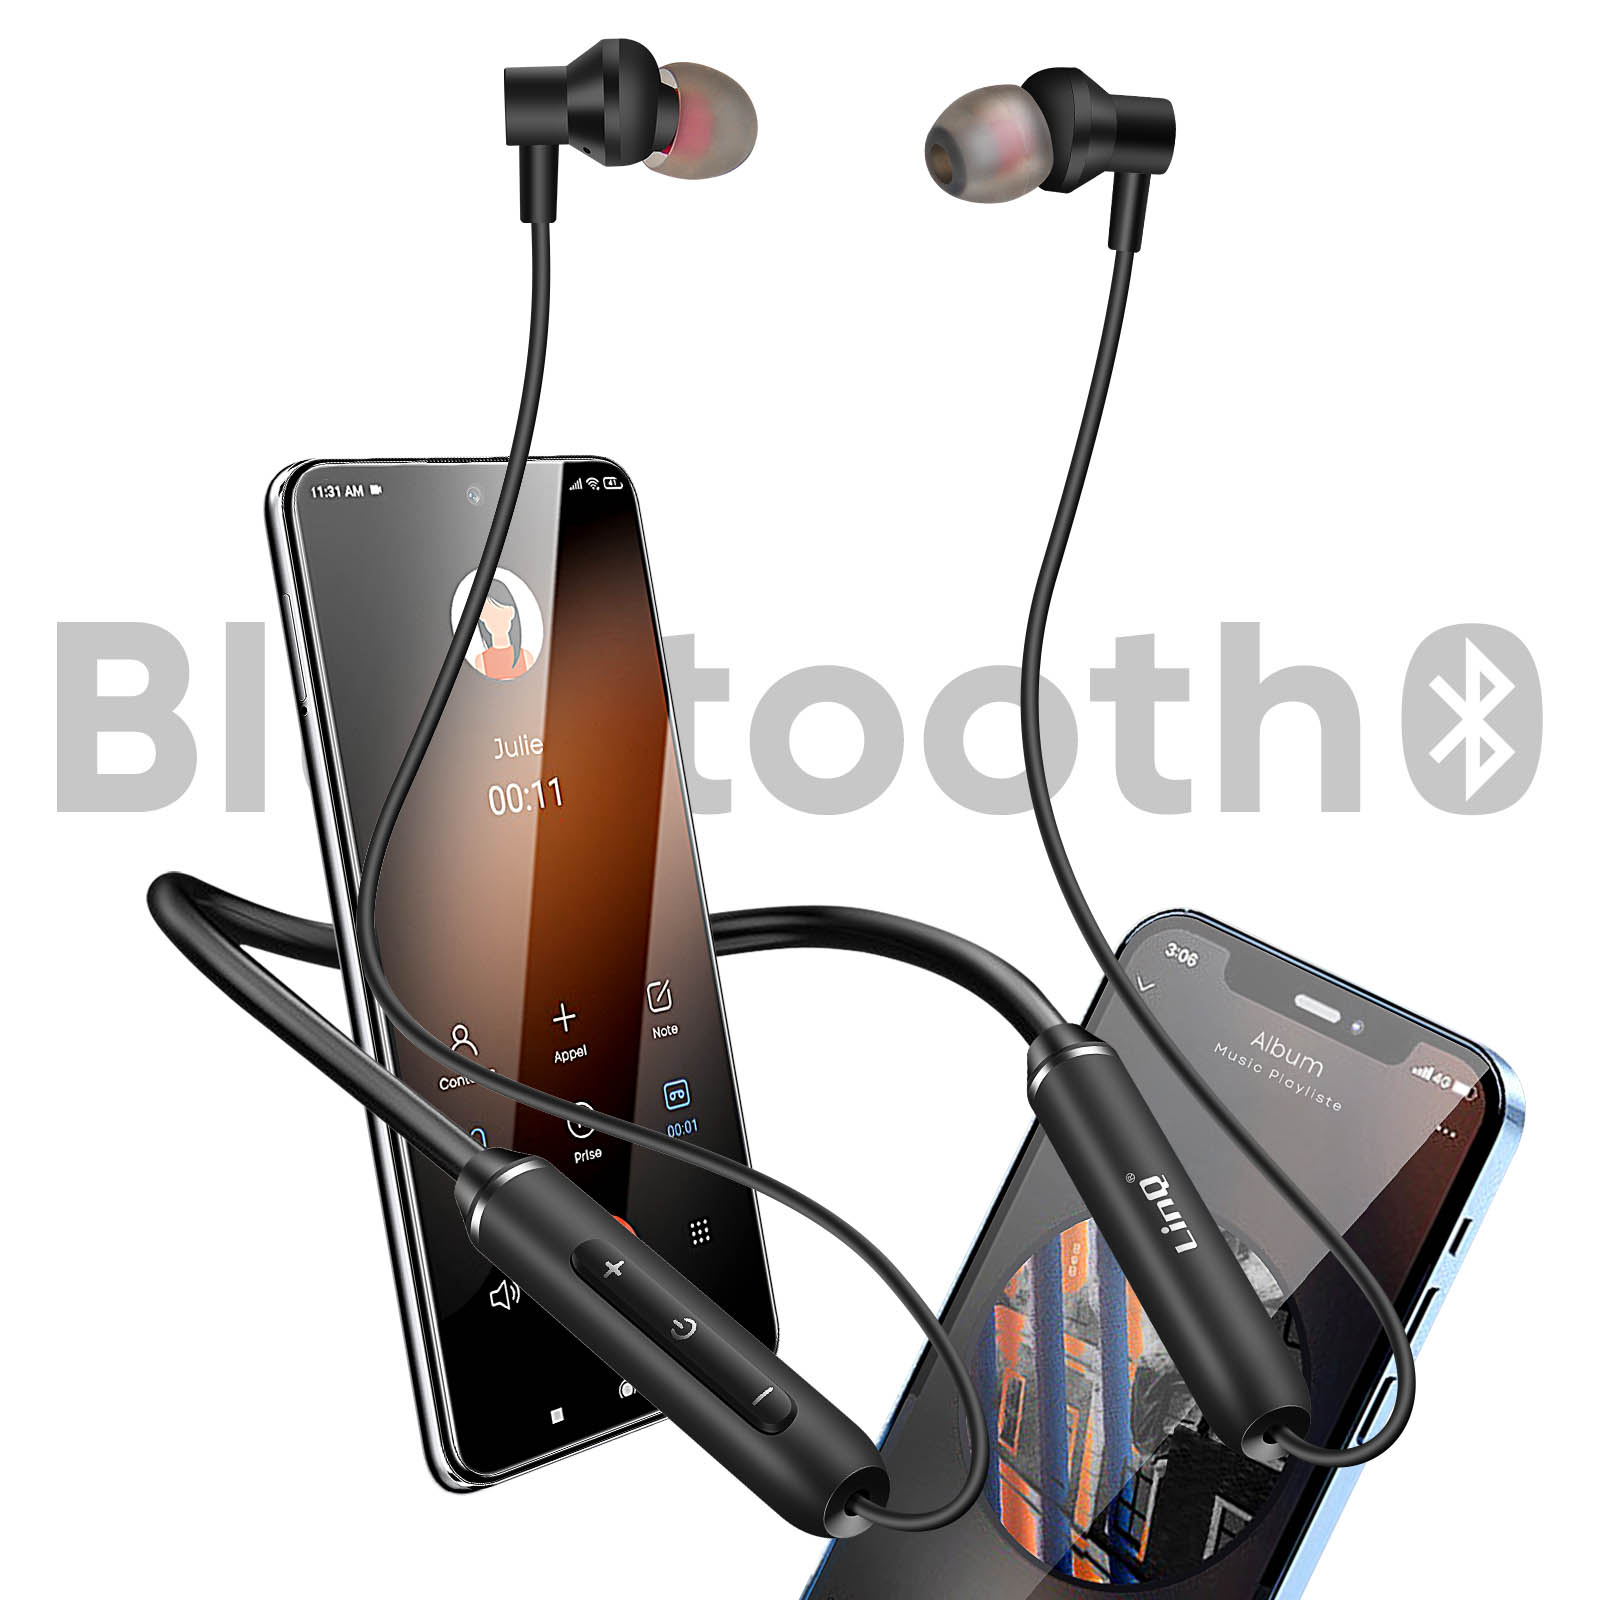 LINQ Nackenbügel, Modell S700 Bluetooth Kopfhörer